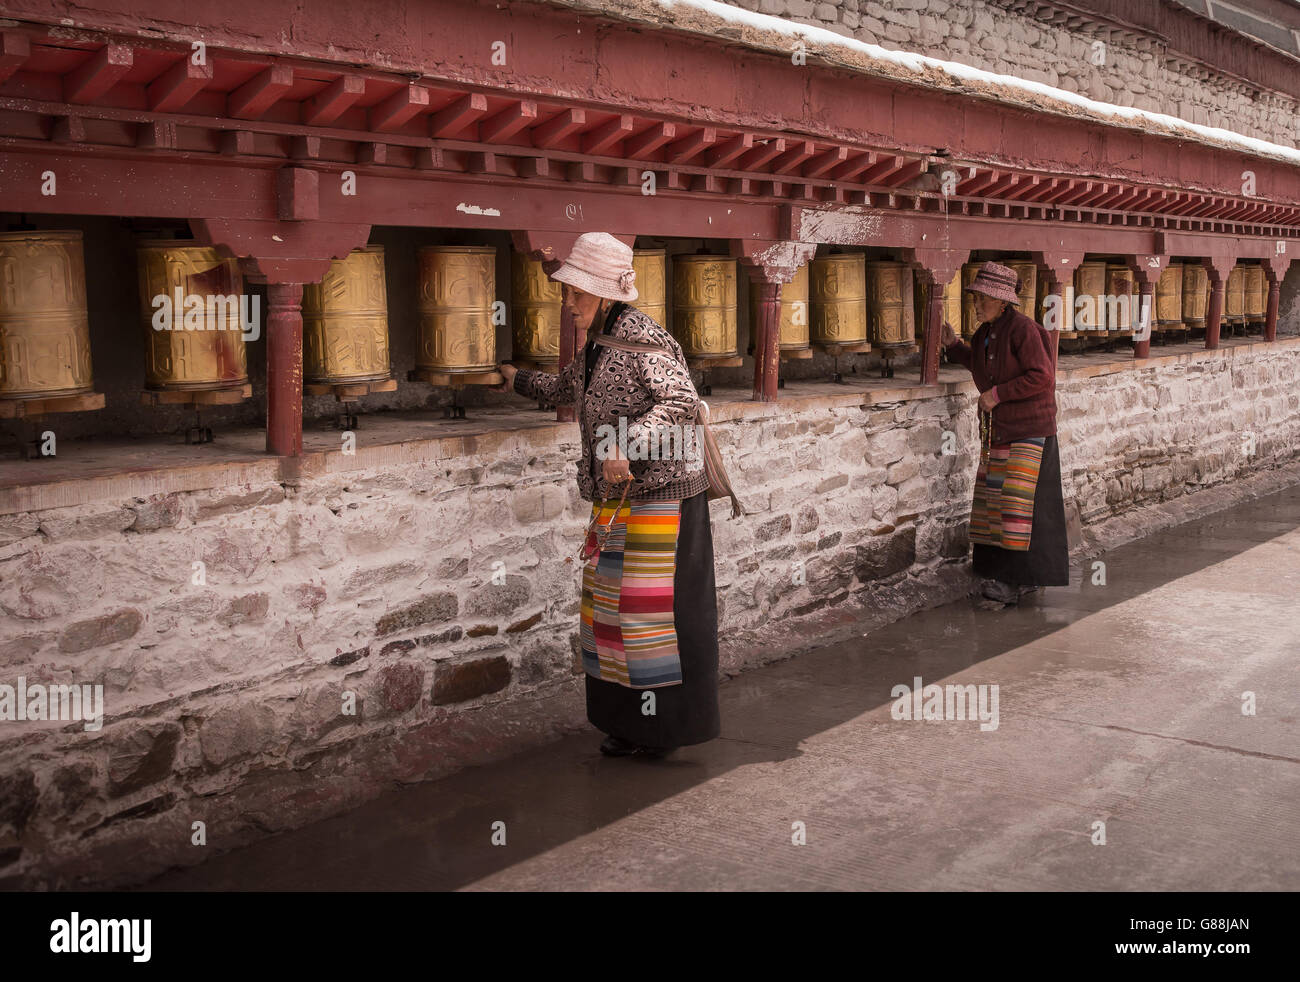 SHIGATSE, TIBET – MAY 2016 - Two women spin prayer wheels at a Kora circuit around Tashi Lhanpo monastery in Shigatse, Tibet. Stock Photo